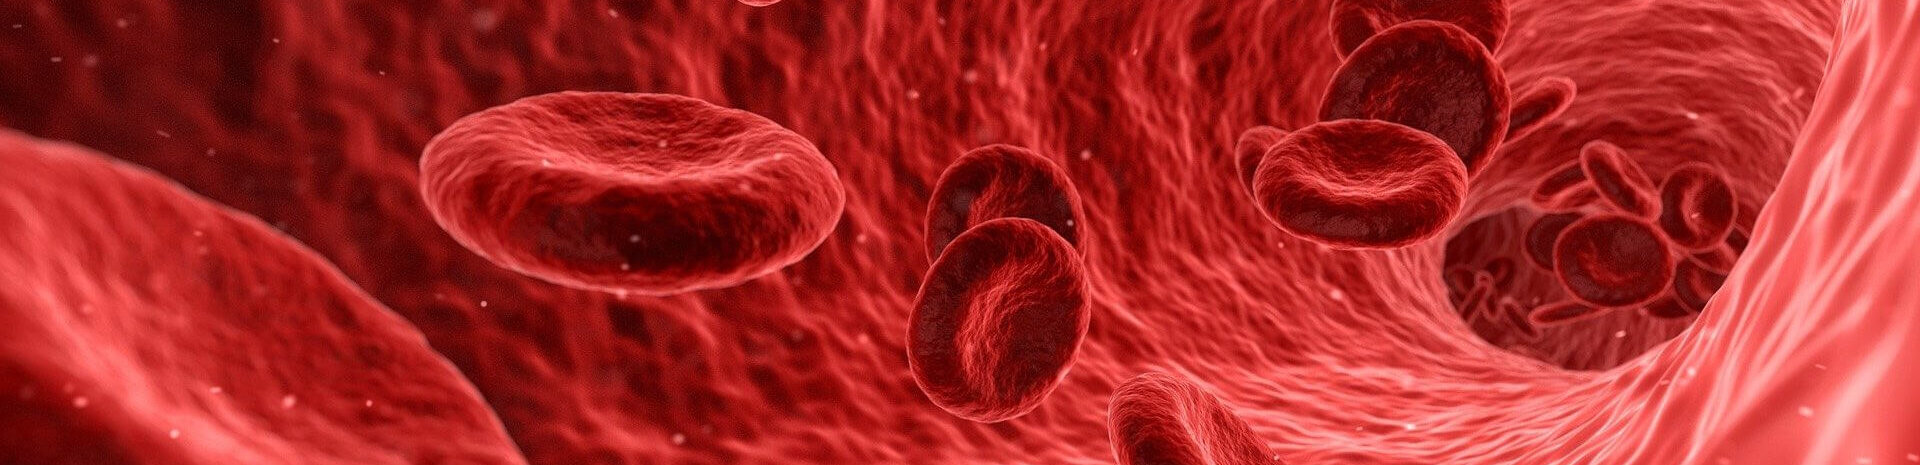 Rote Blutkörper Hypnose Mannheim Andullation